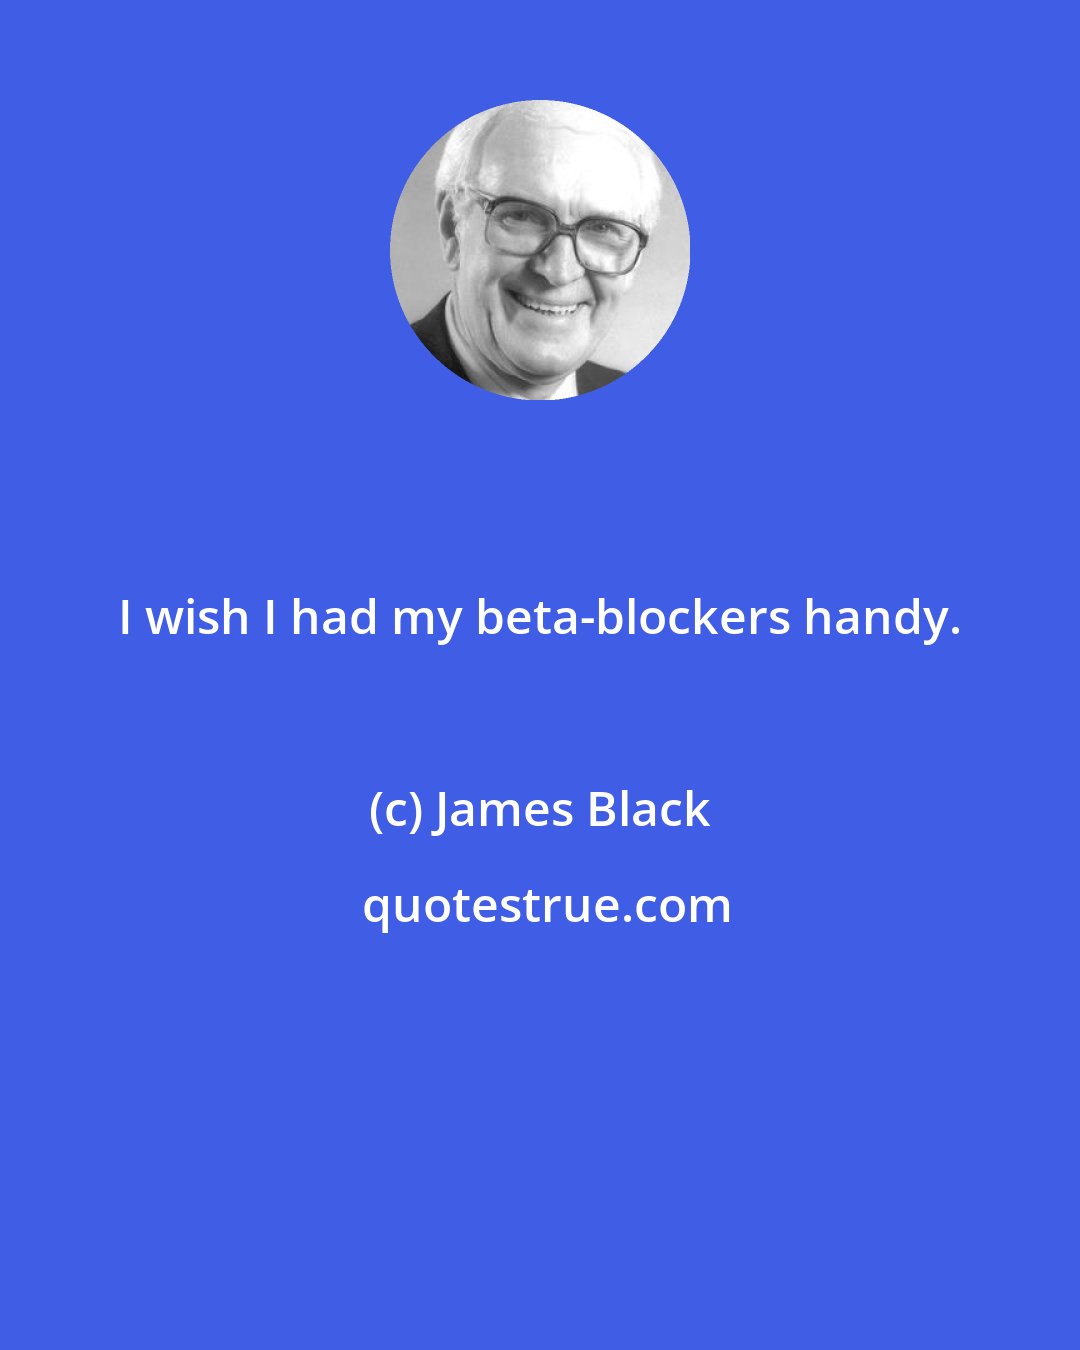 James Black: I wish I had my beta-blockers handy.